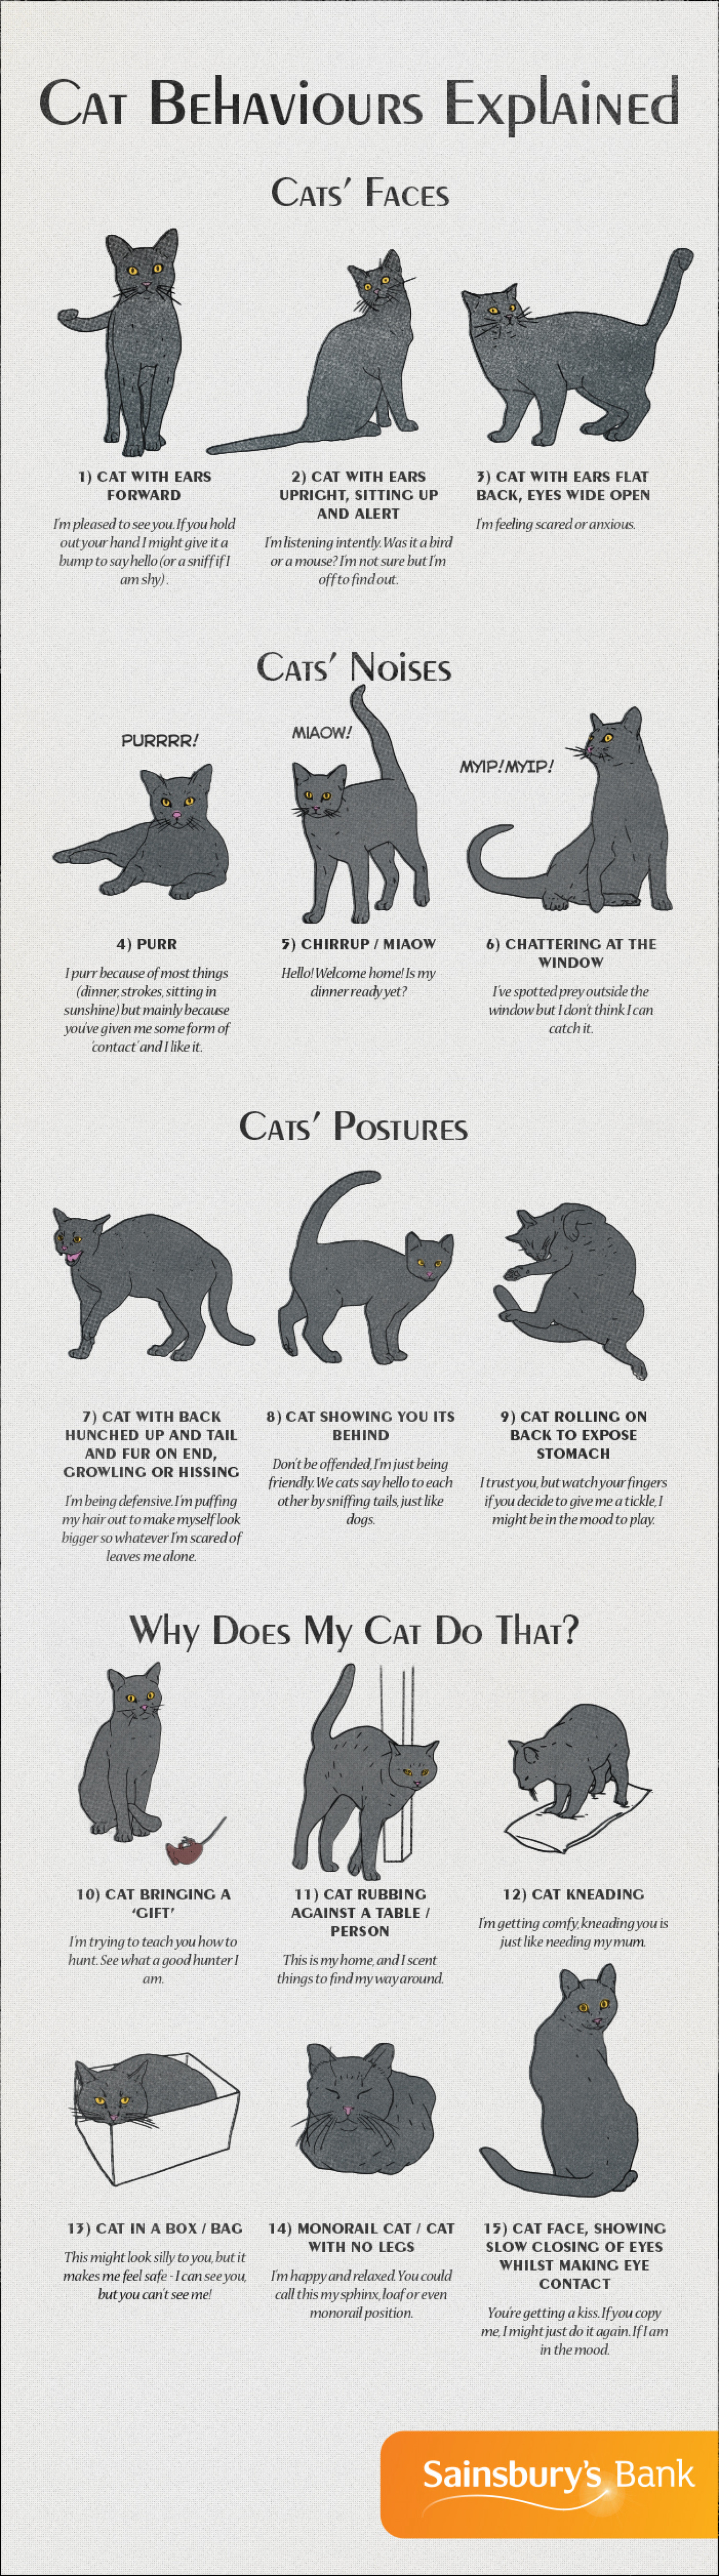 Cat Behaviours Explained Infographic